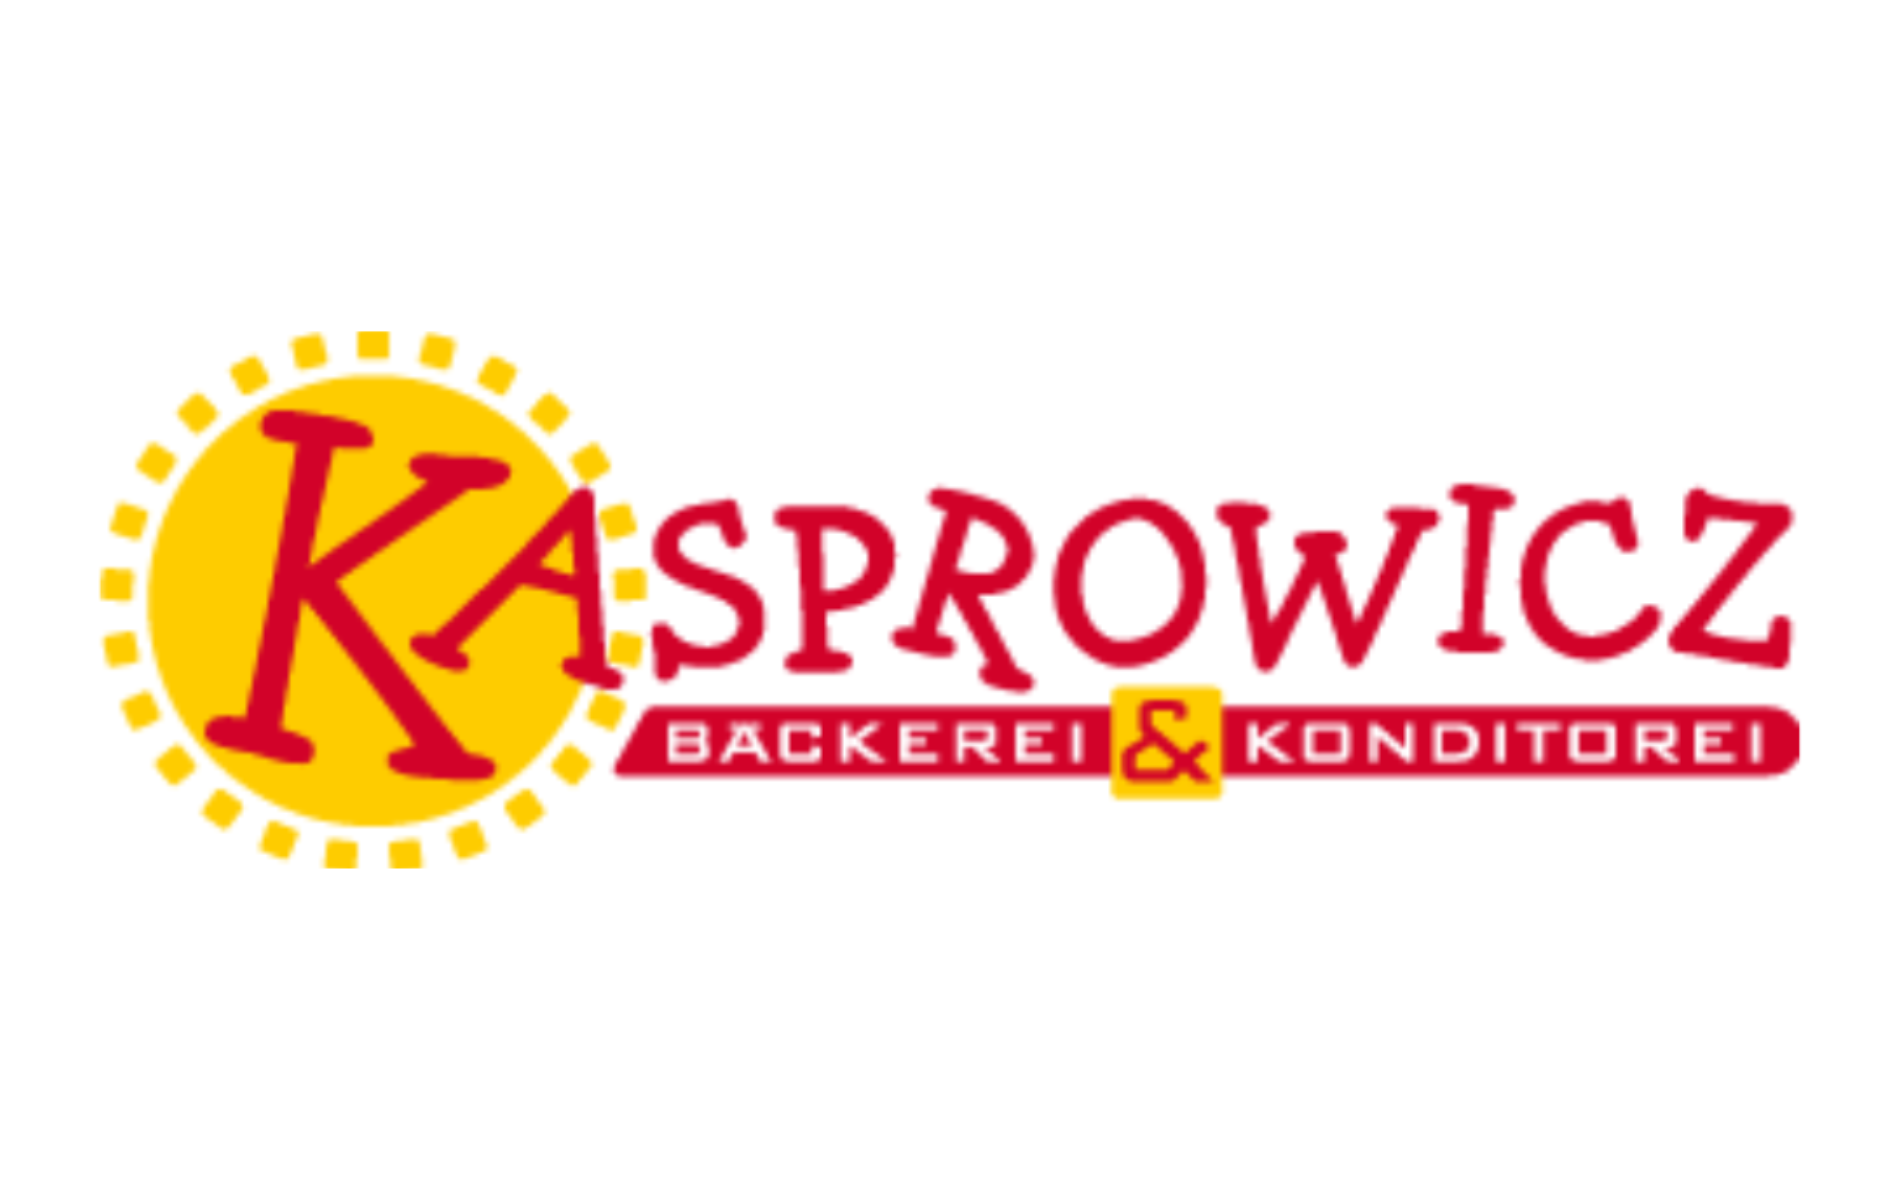 Bäckerei und Konditorei Kasprowicz GmbH